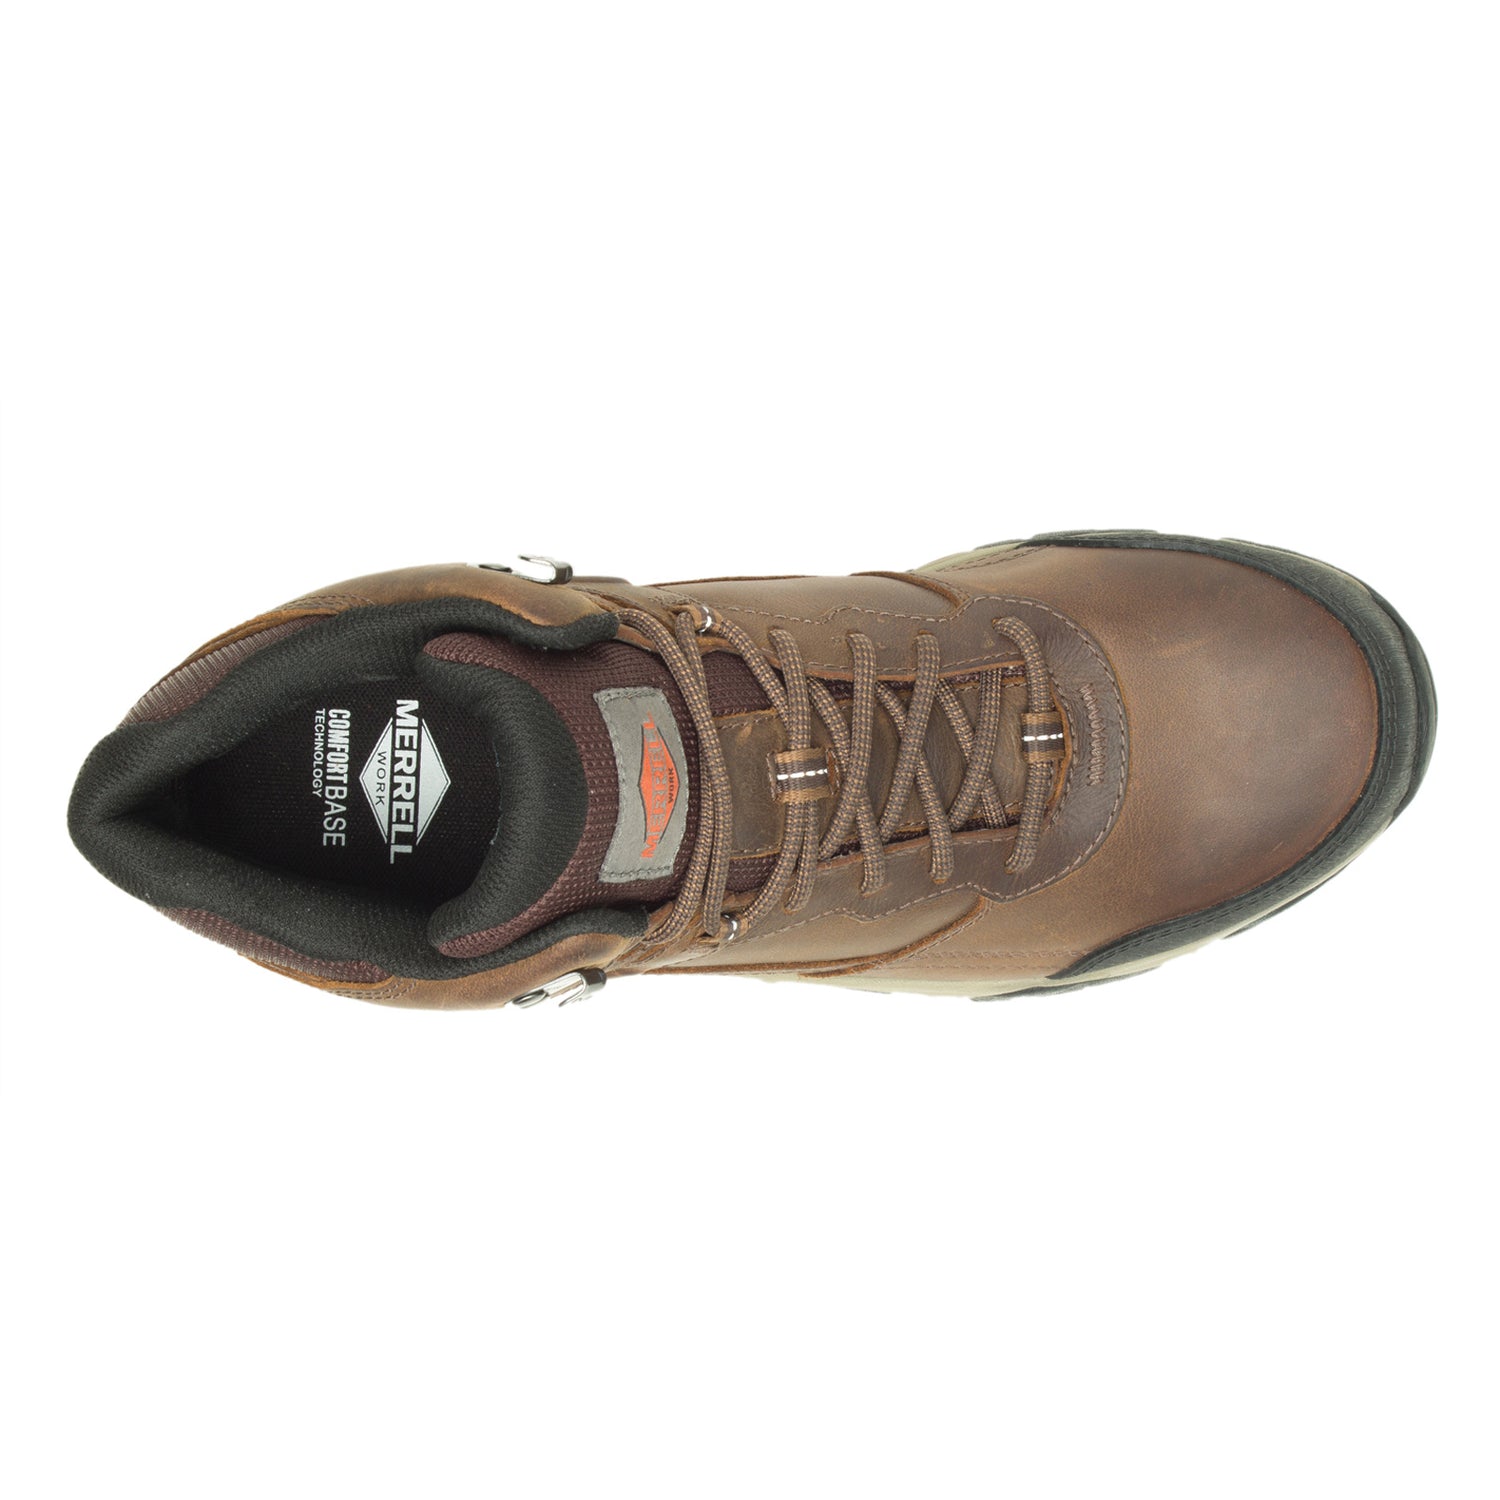 Peltz Shoes  Men's Merrell Moab Adventure Mid Waterproof Carbon Fiber Work Shoe TOFFEE J004633